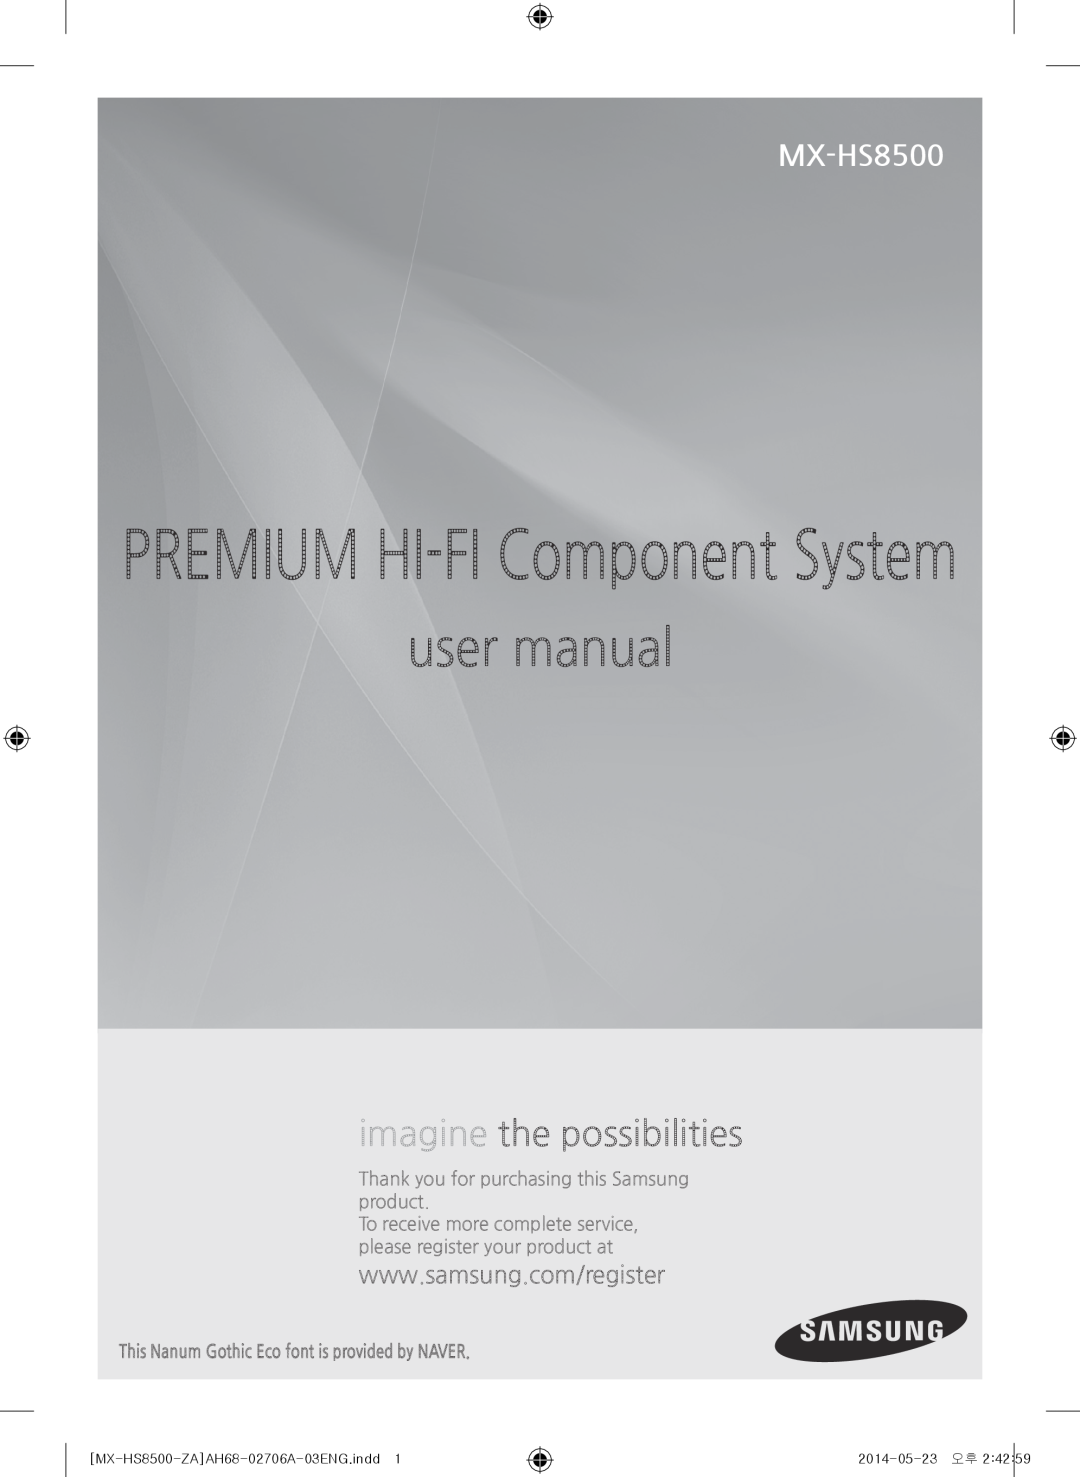 Samsung MX-HS8500 user manual PREMIUM HI-FIComponent System, imagine the possibilities, 2014-05-23 오후 2 